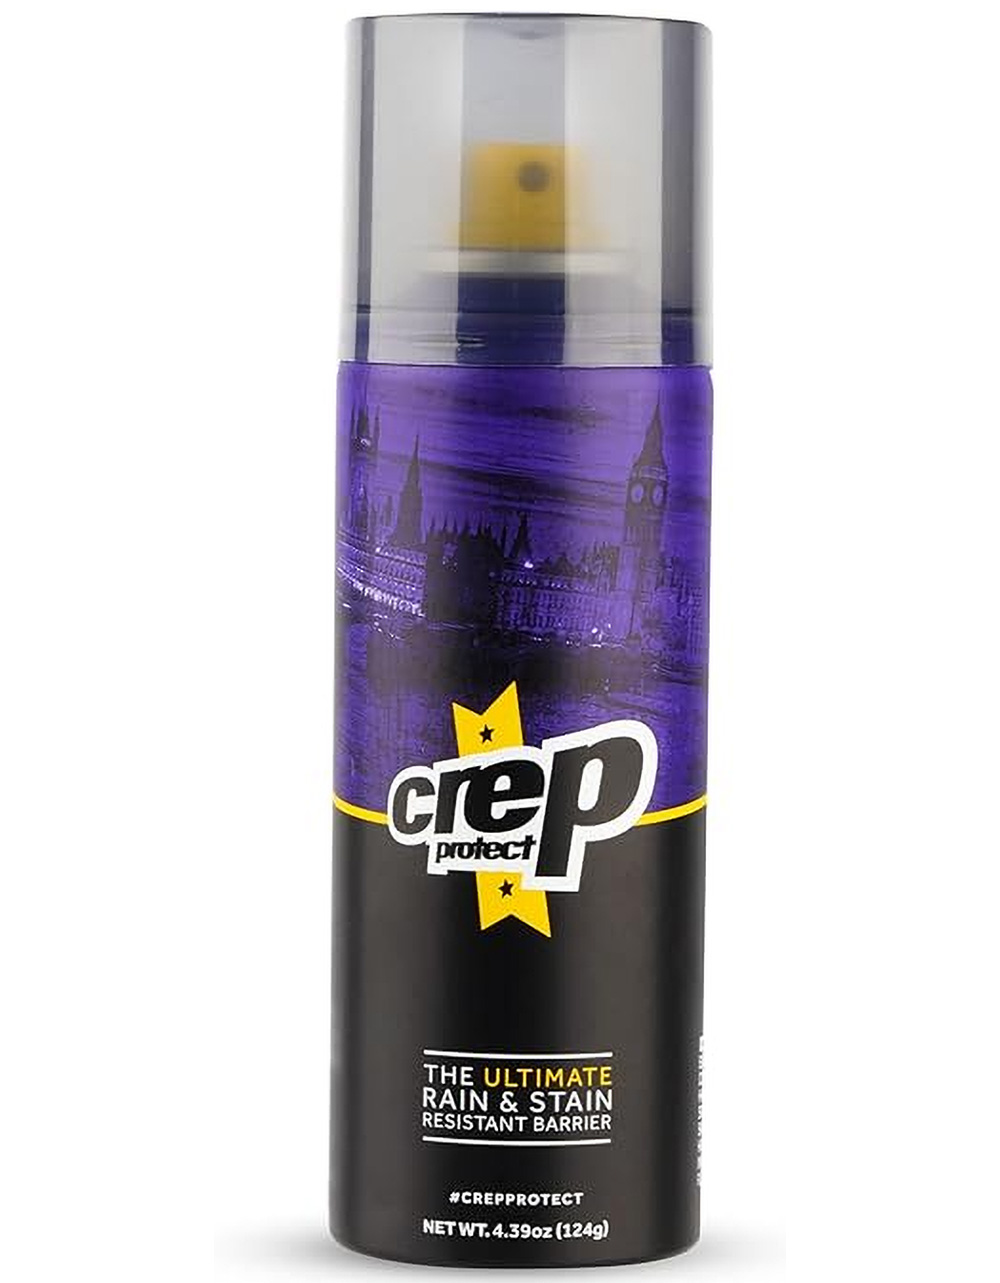 CREP PROTECT Shoe Protector Spray